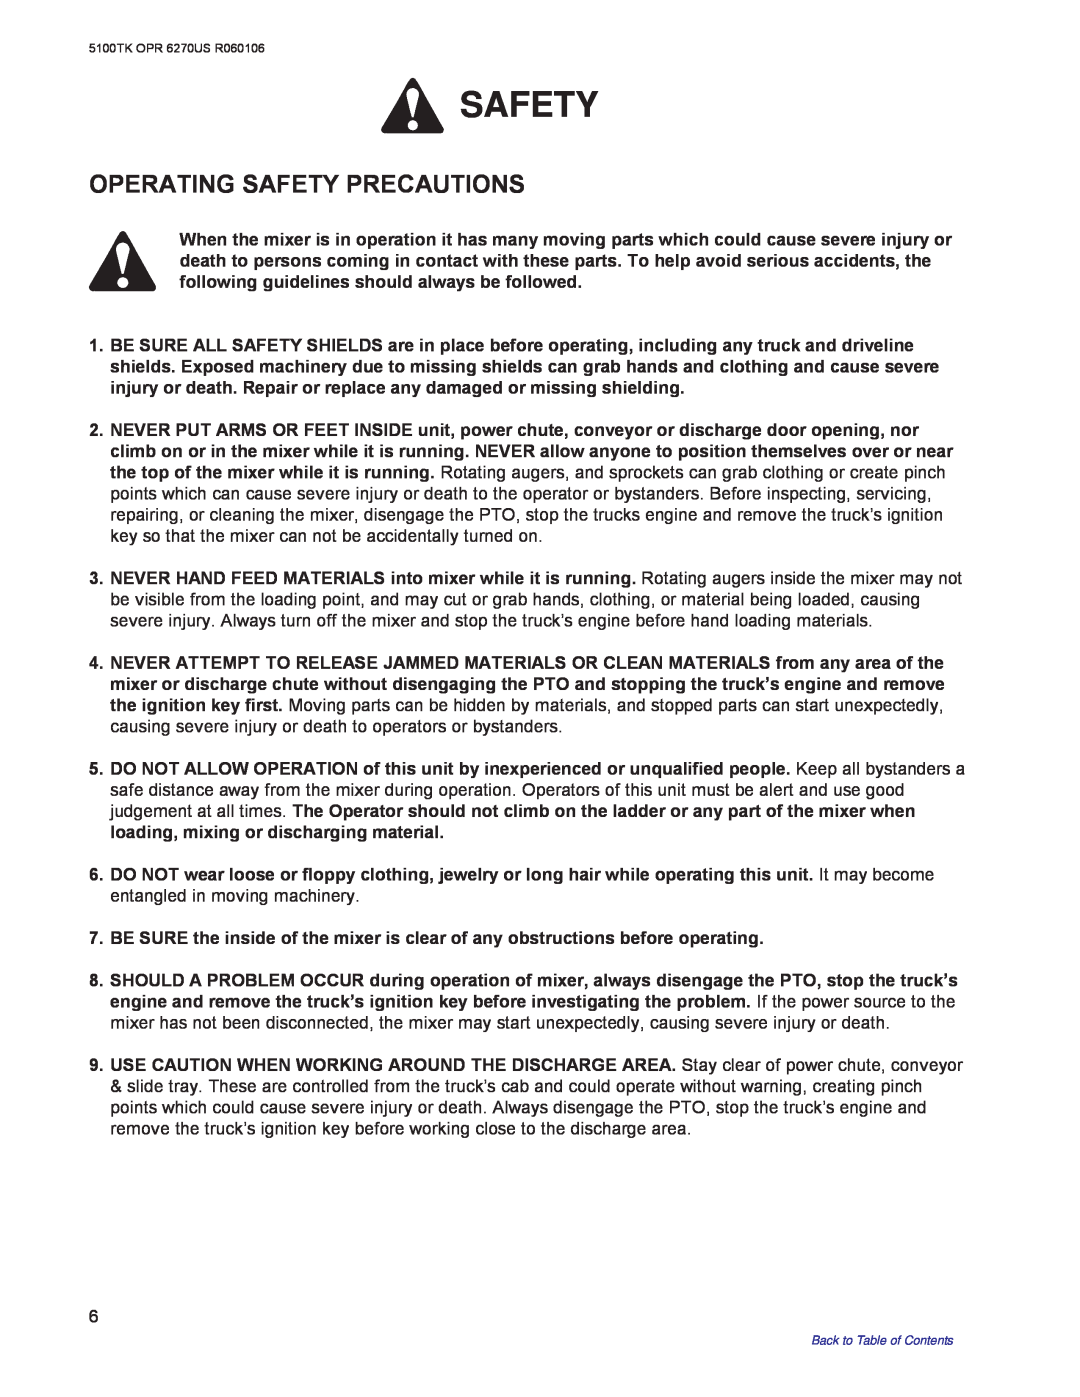 Kuhn Rikon 5100 instruction manual Operating Safety Precautions 